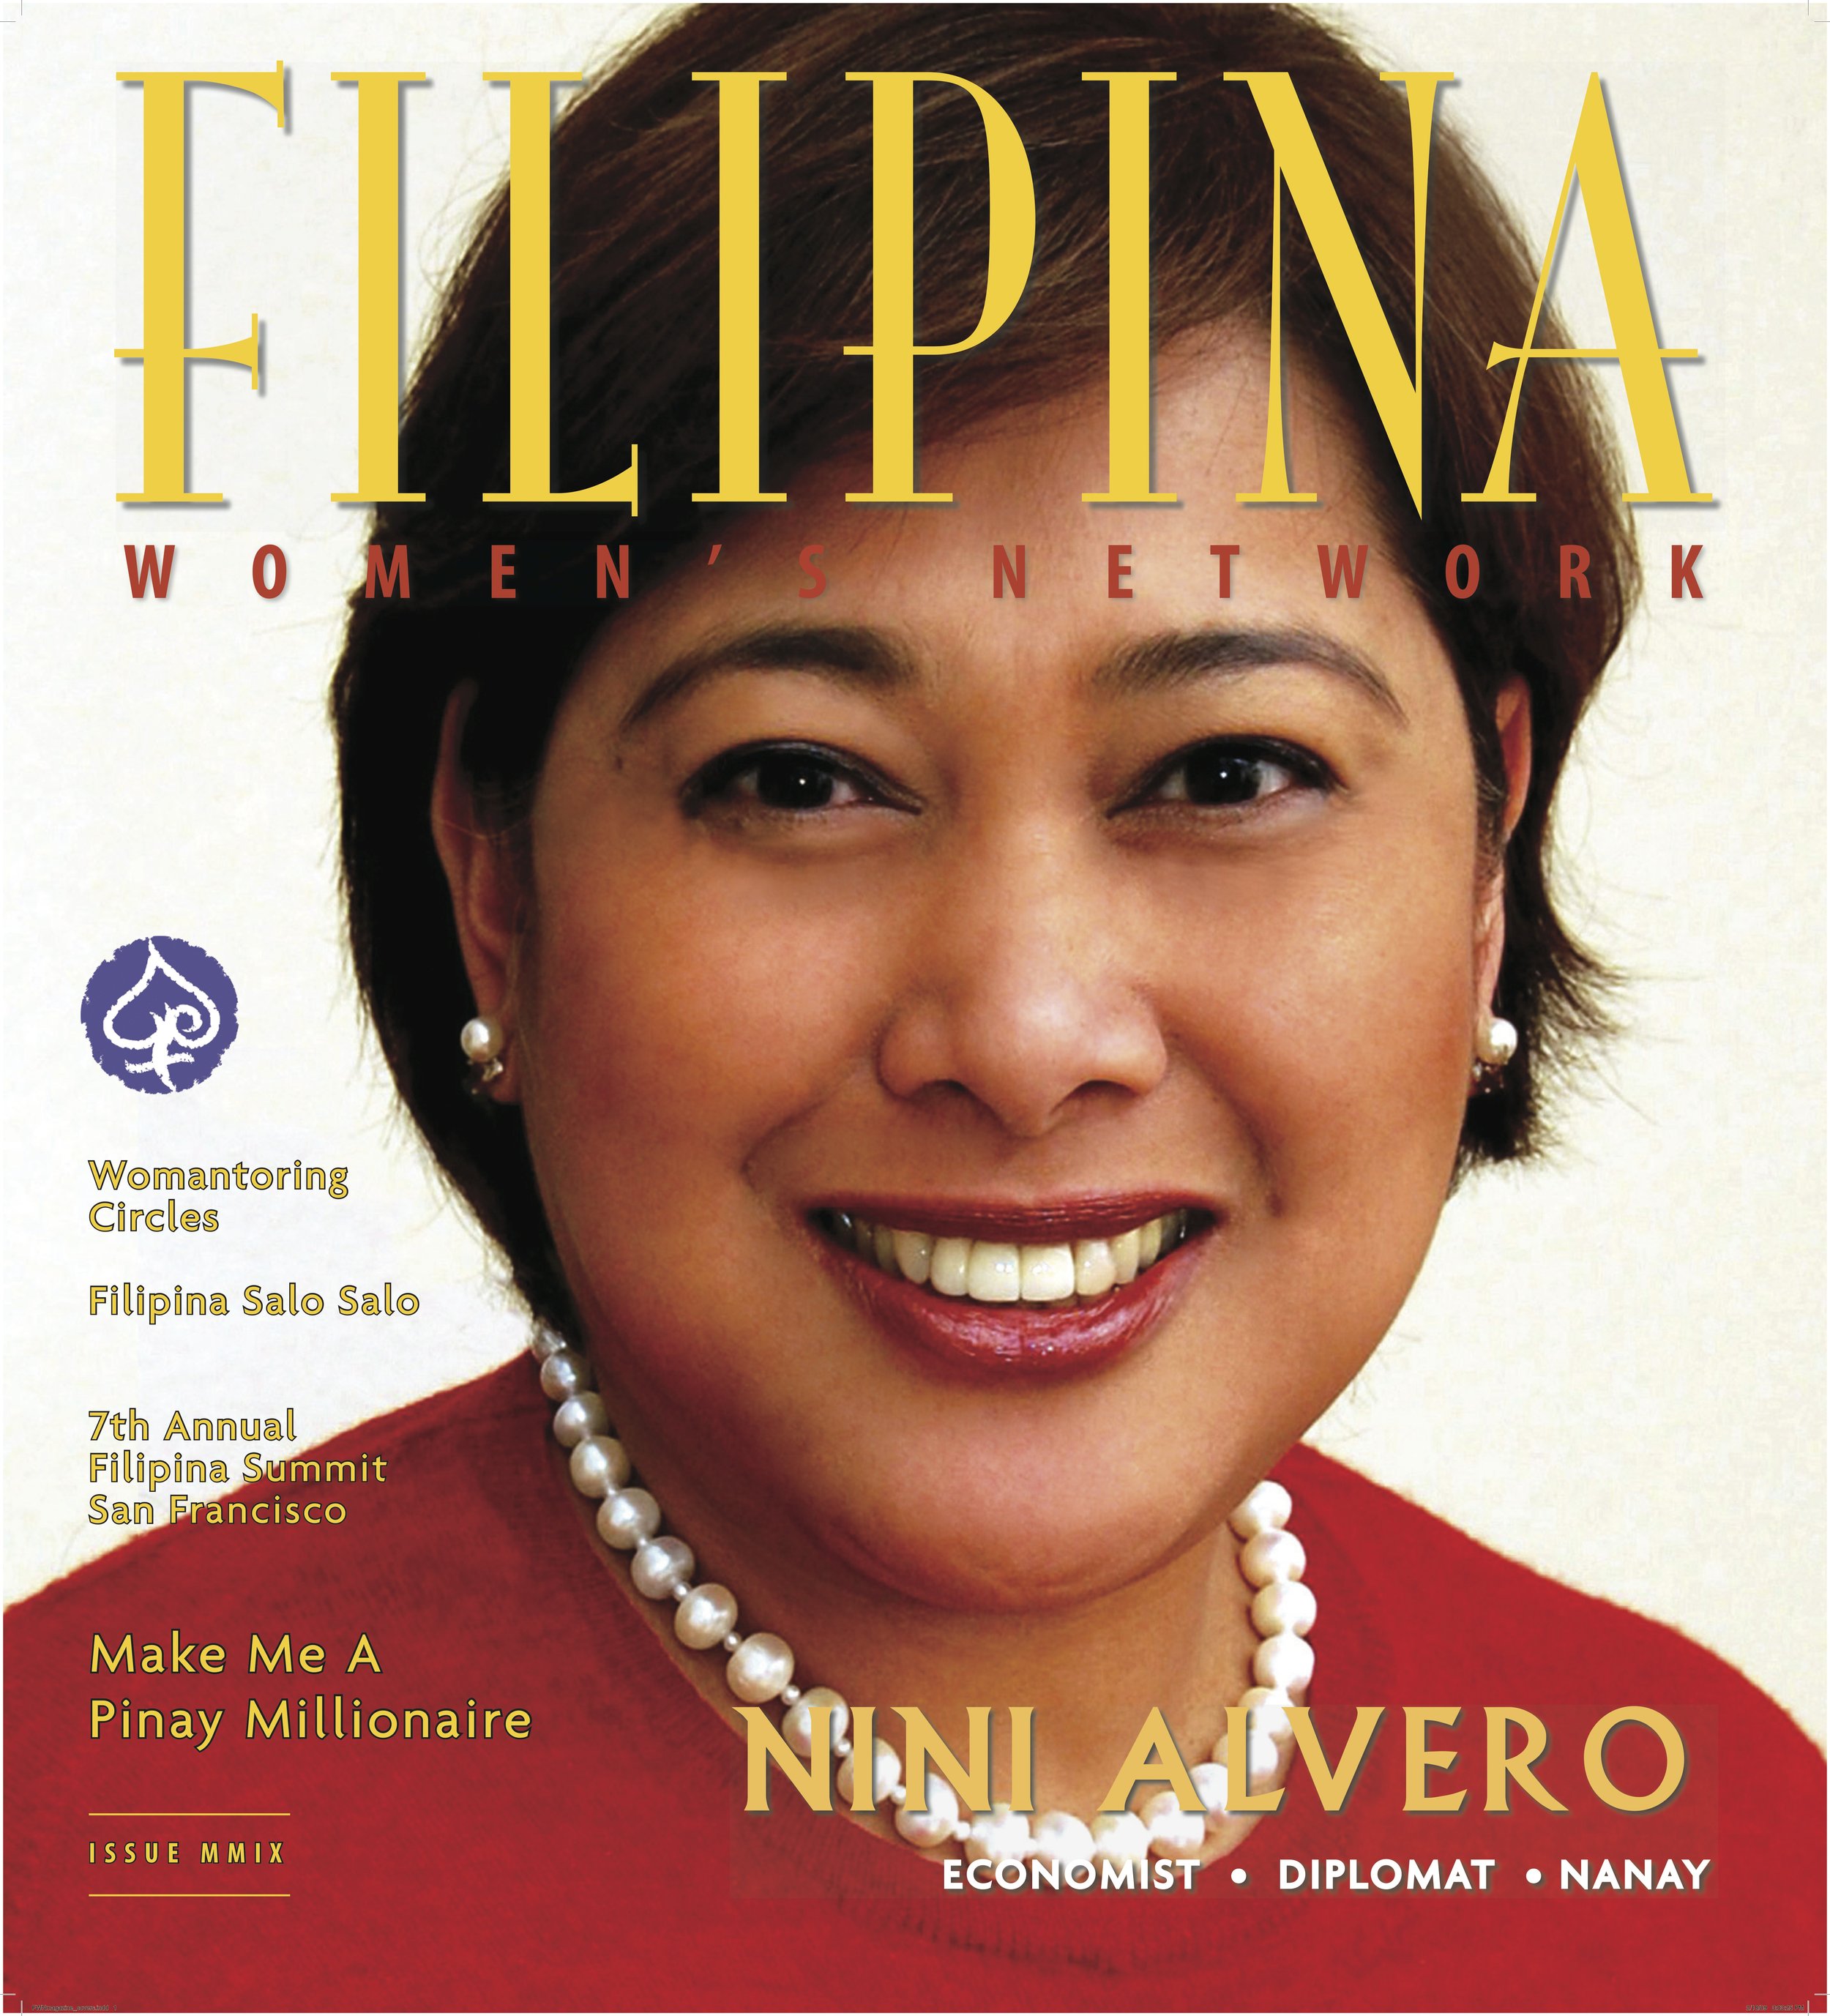 2008 FWN Magazine Cover - NiniAlvero.jpg